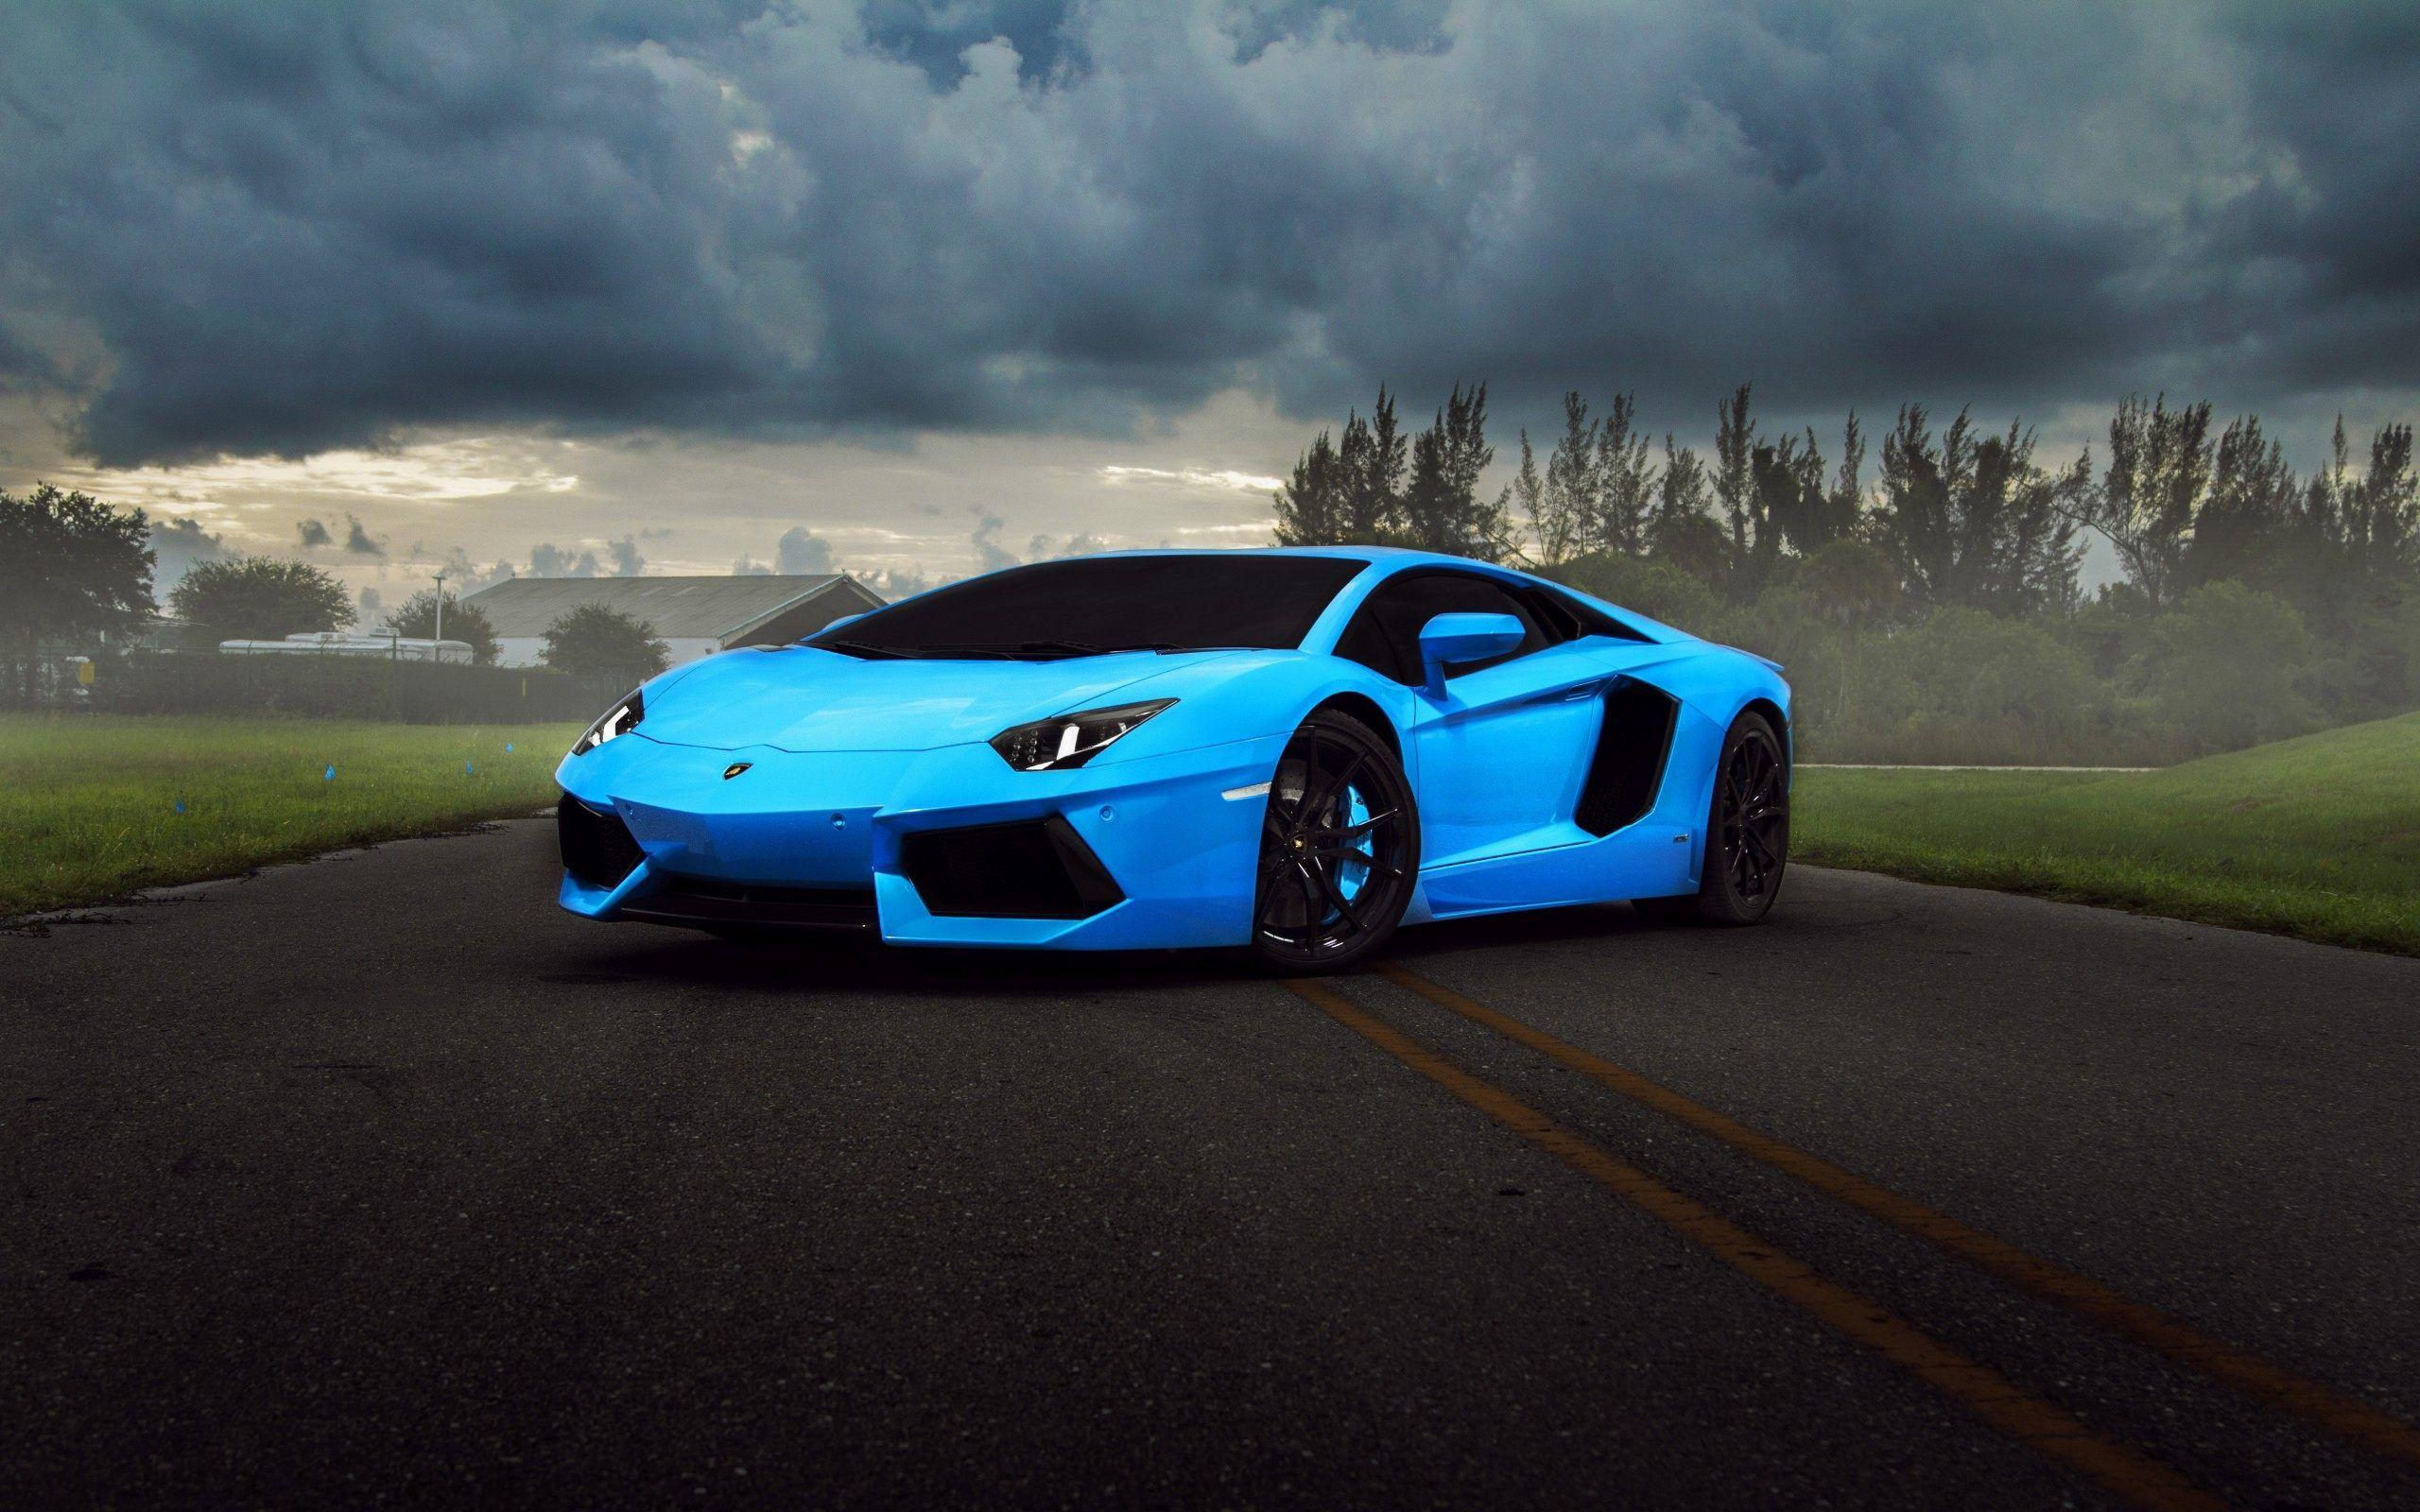 Blue Lamborghini Wallpaper Free. Blue lamborghini, Car wallpaper, Super cars